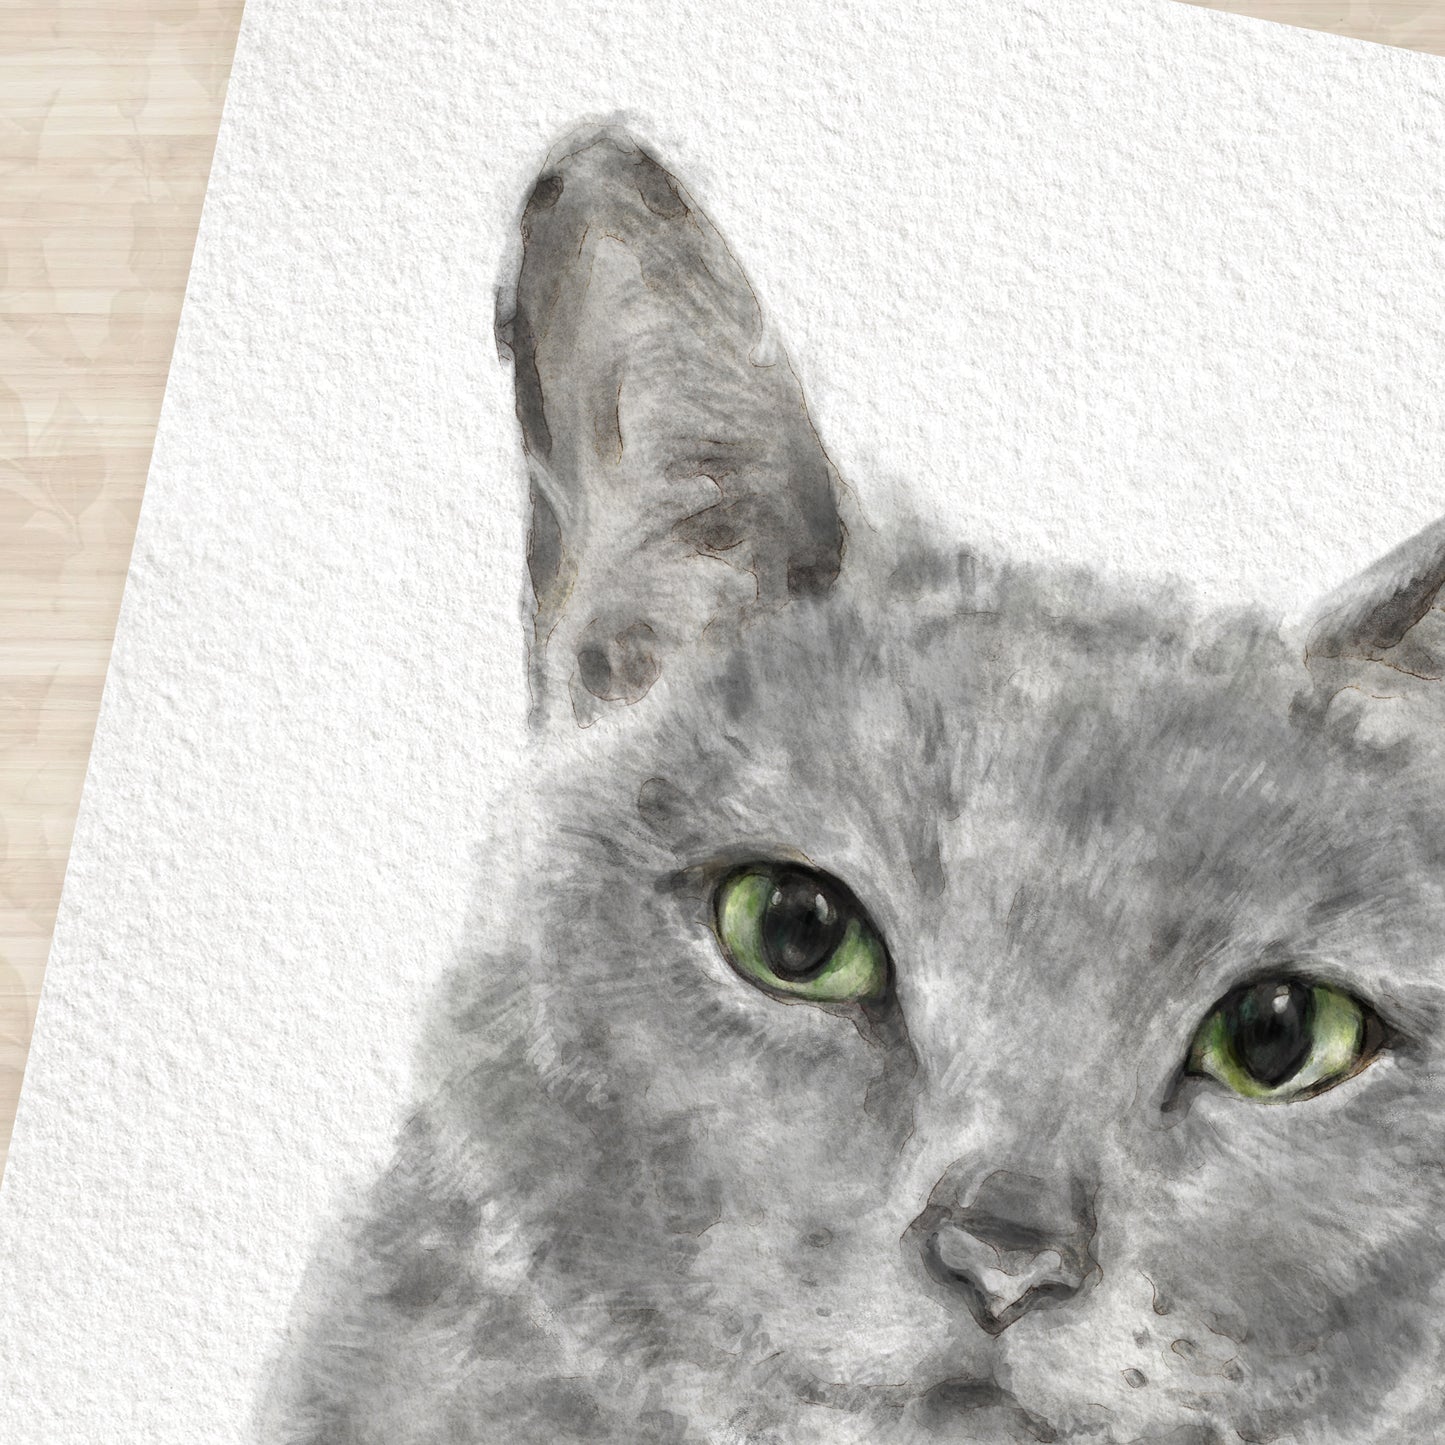 Gray Cat Modern Watercolor Painting, Home Wall Art Print